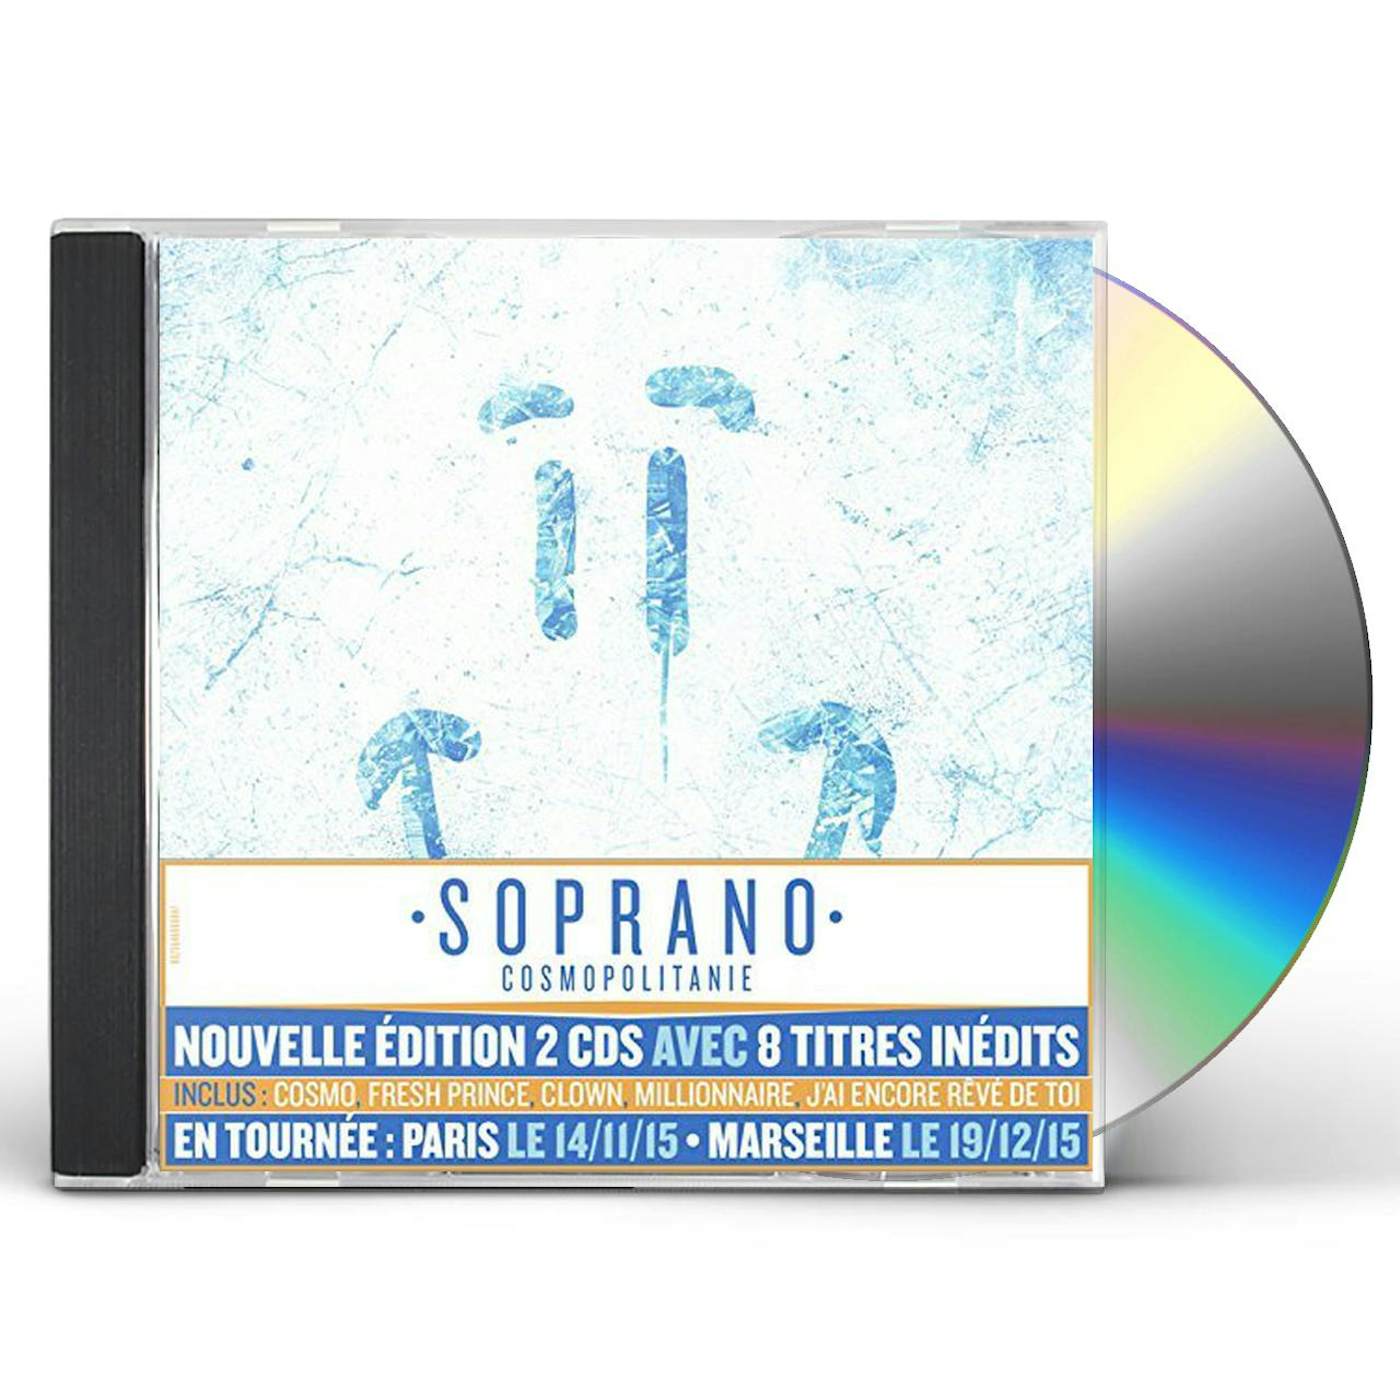 Soprano COSMOPOLITANIE: EN ROUTE VERS L'EVEREST CD